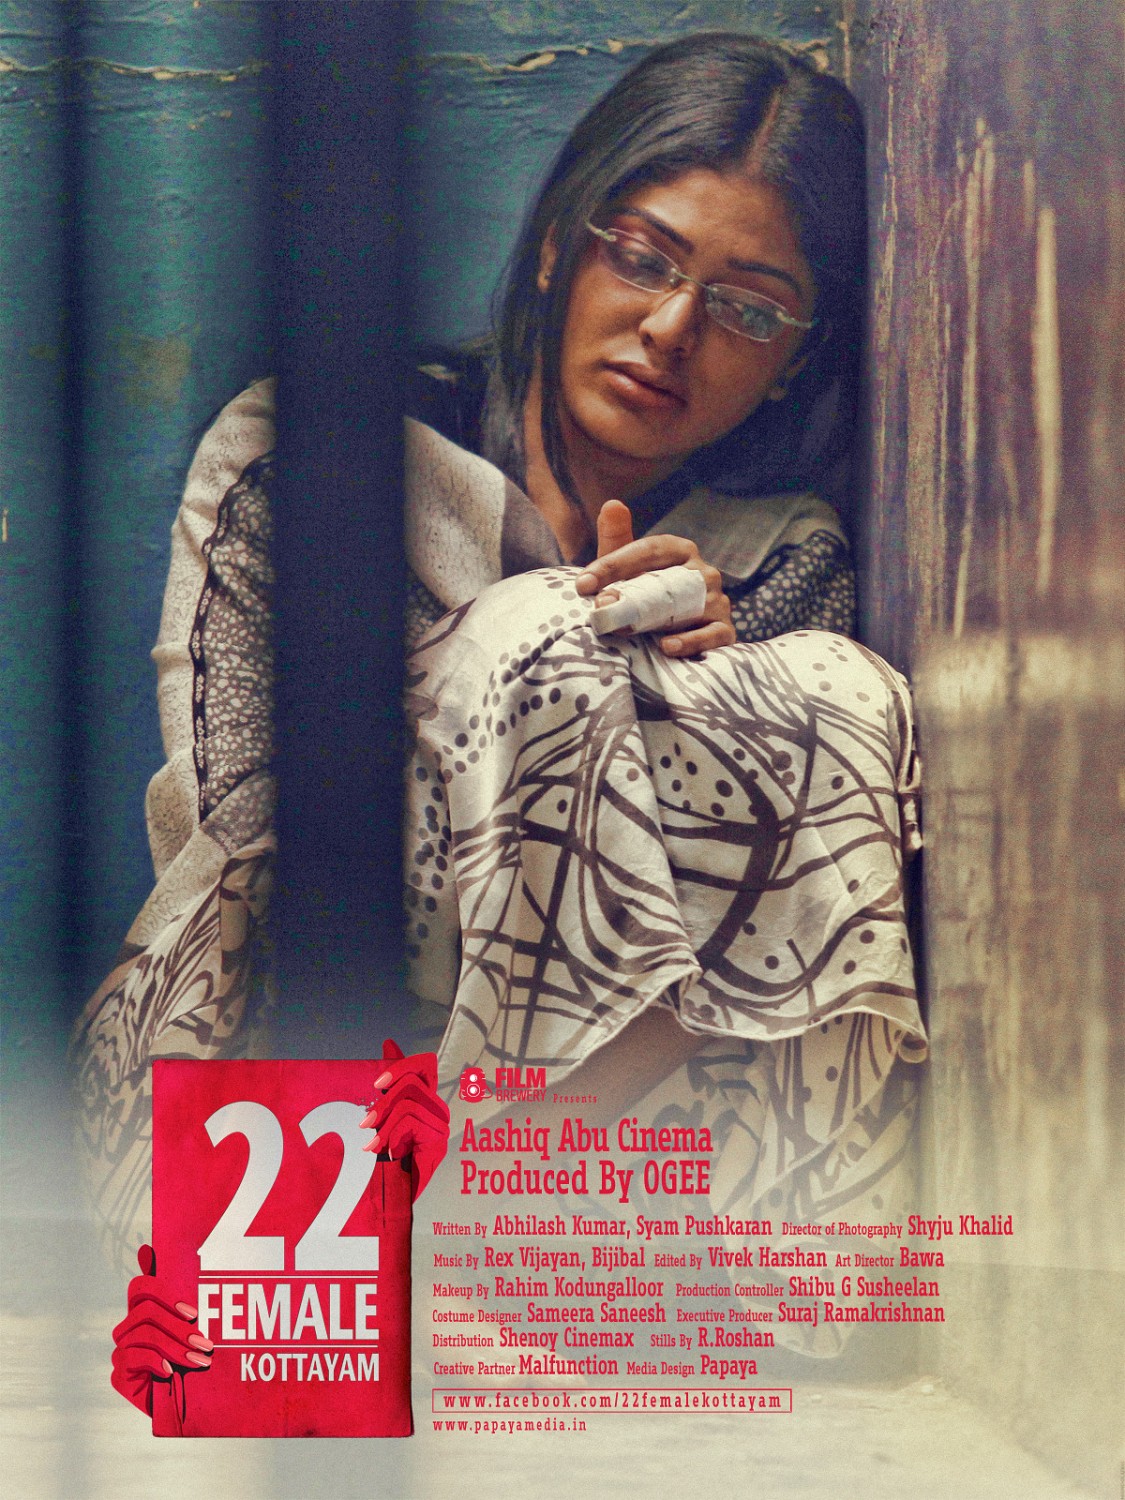 Extra Large Movie Poster Image for 22 Female Kottayam (#18 of 28)